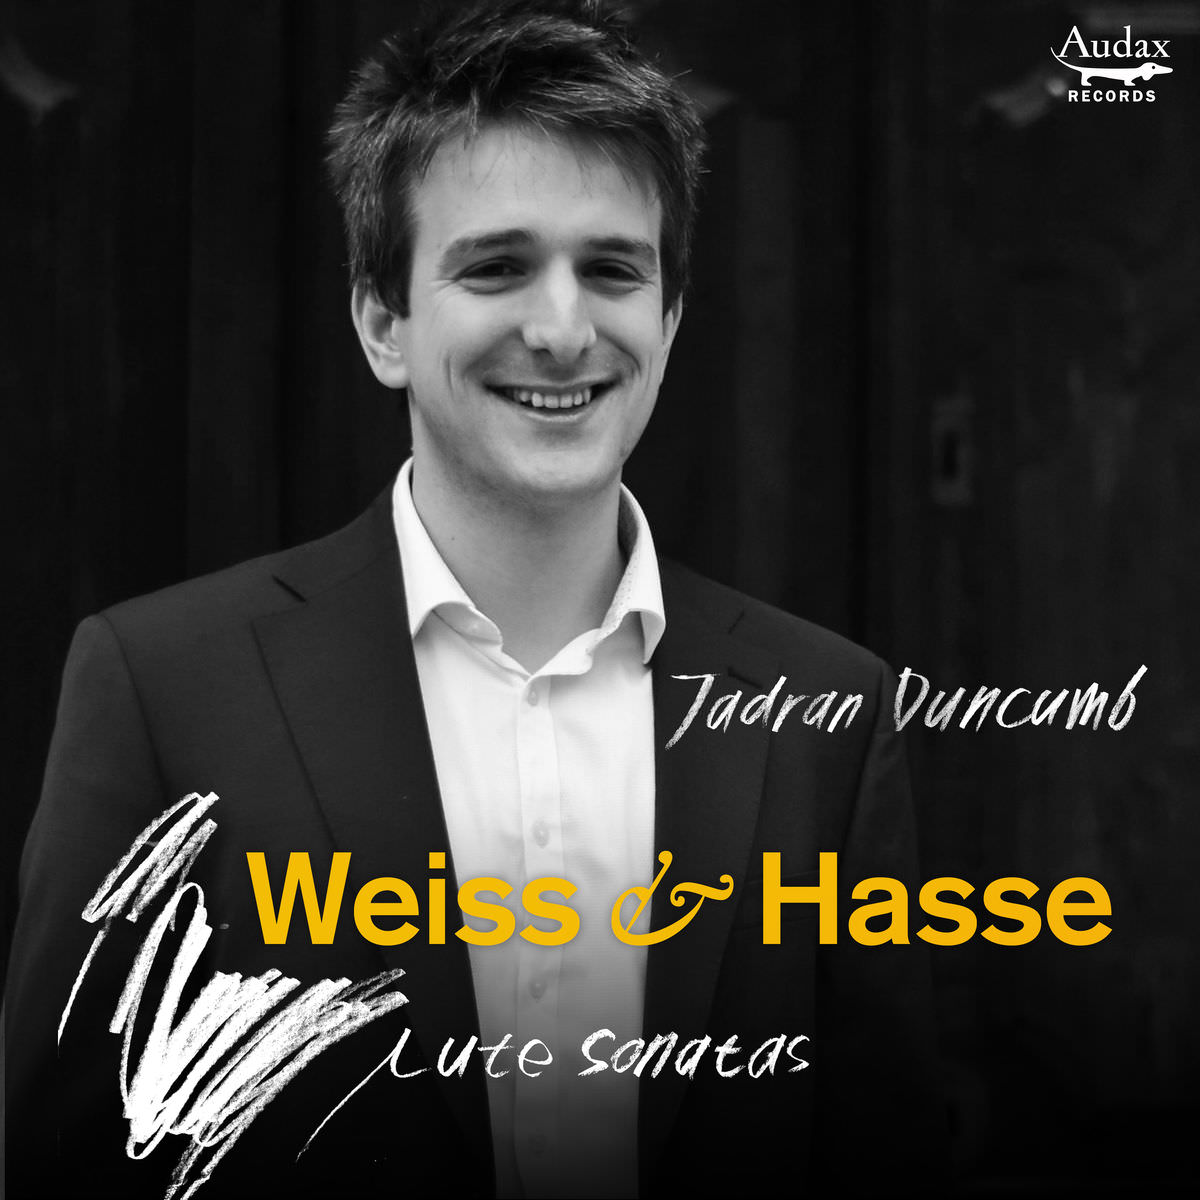 Jadran Duncumb - Weiss & Hasse: Lute Sonatas (2018) [FLAC 24bit/96kHz]